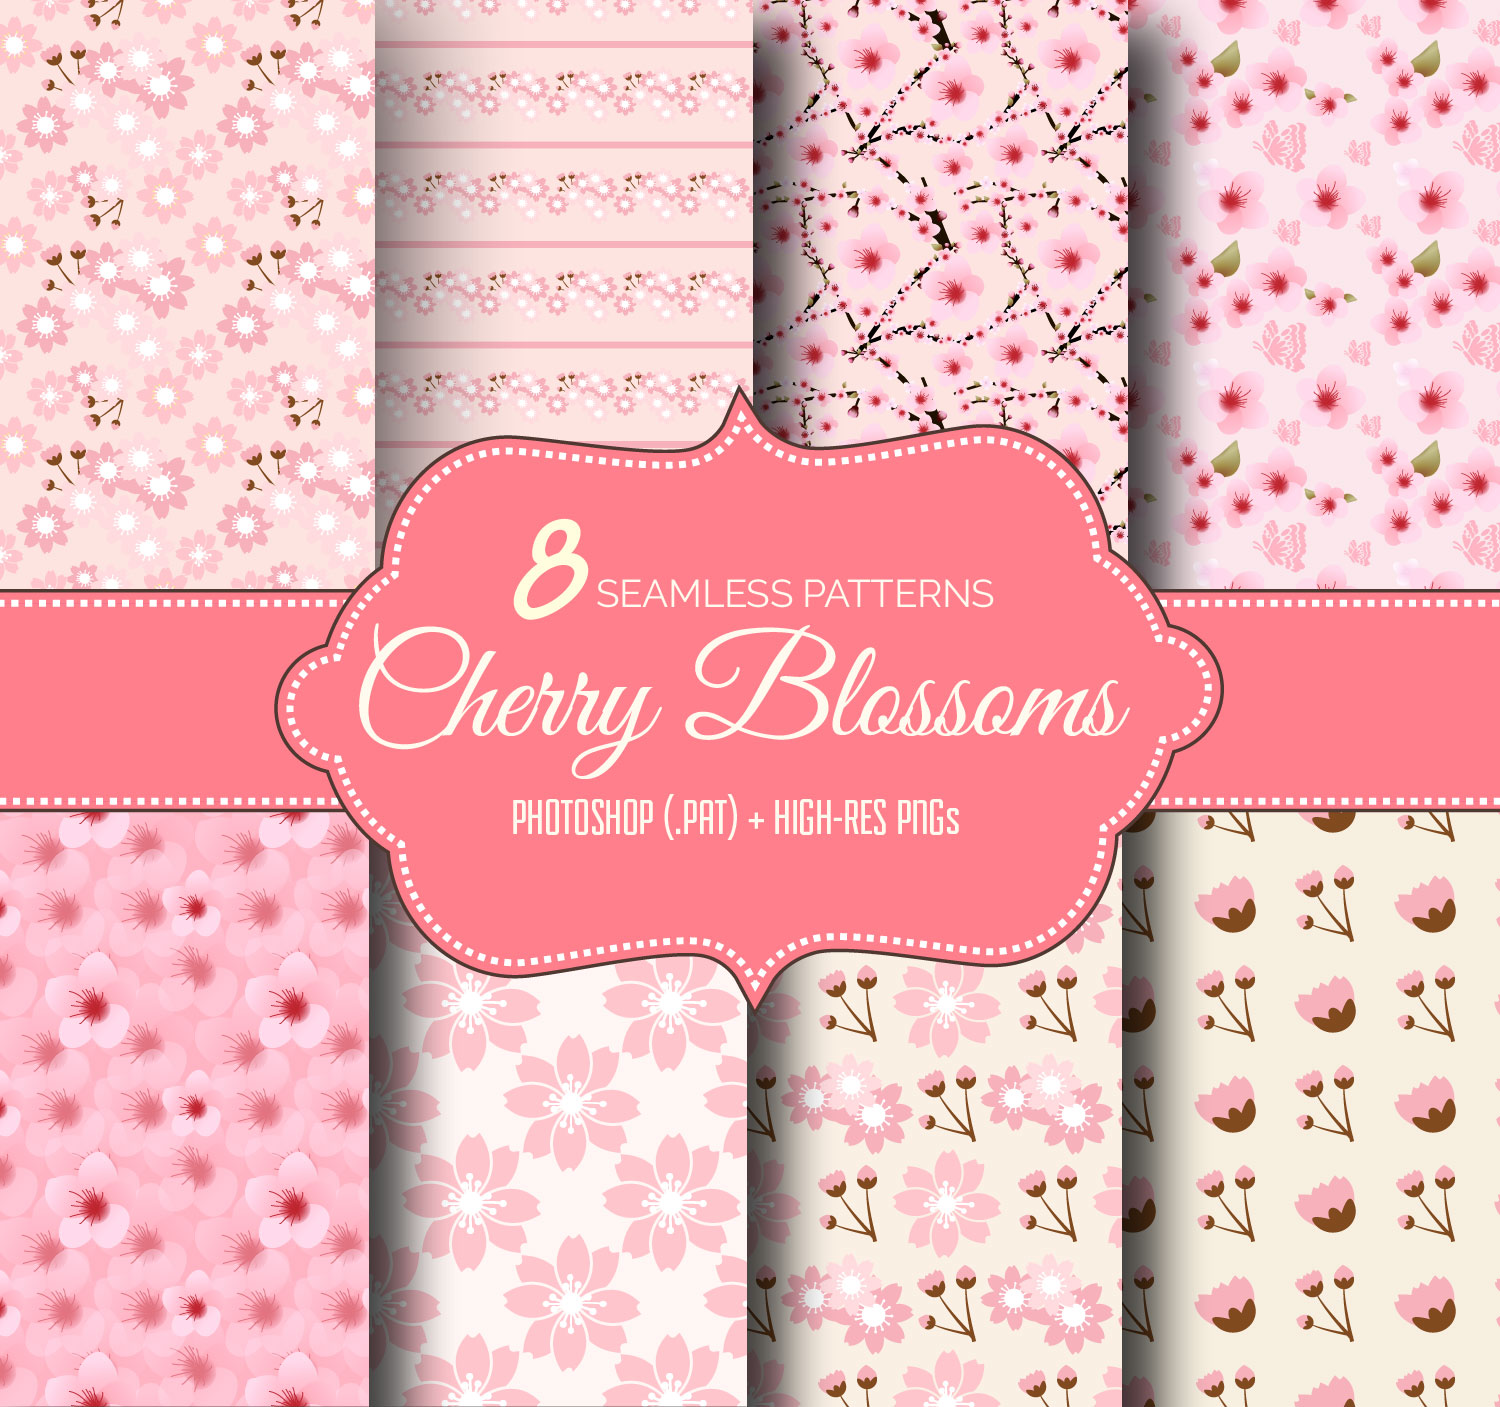 http://www.photoshopfreebrushes.com/wp-content/uploads/2015/04/cherry-blossoms-patterns.jpg